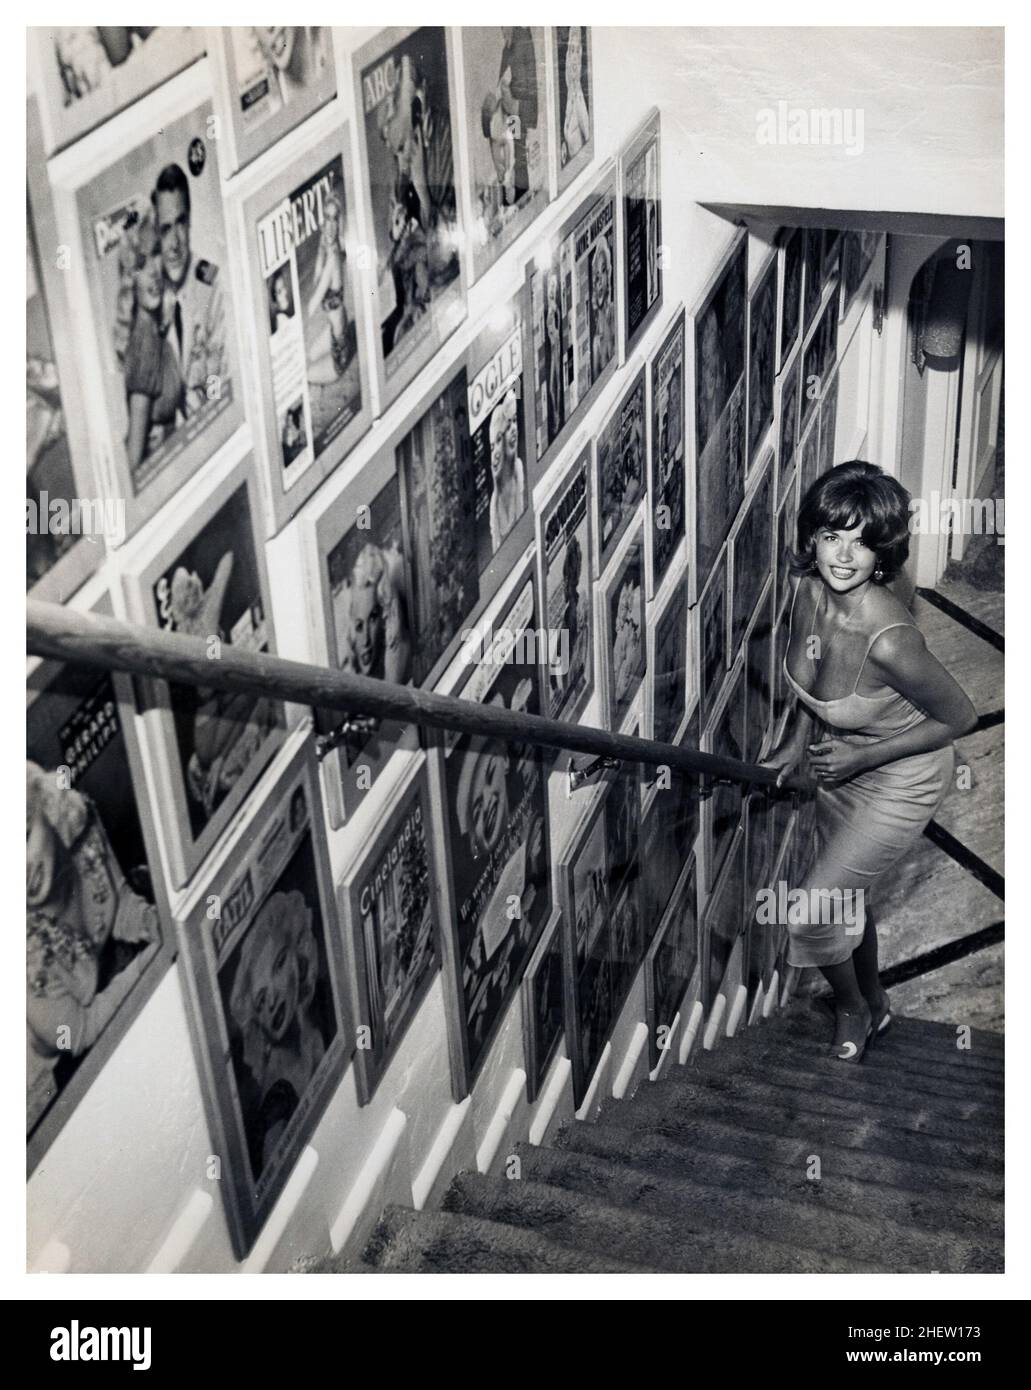 Jayne Mansfield Still (photographe inconnu, 1960) Banque D'Images